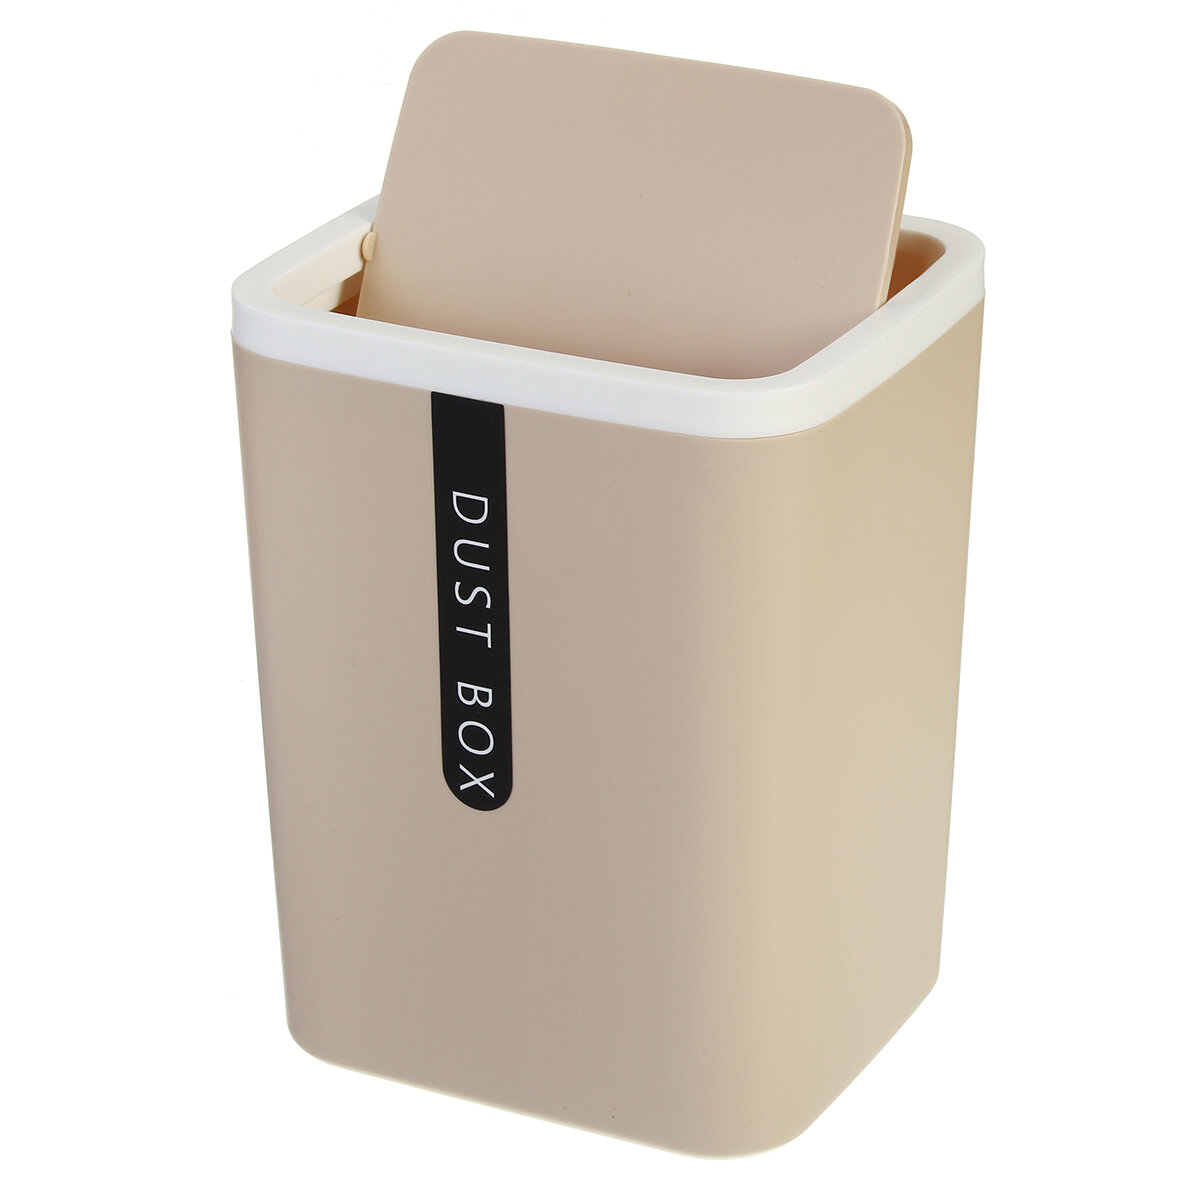 

Japanese Desktop Trash Can Mini Office Plastic Swing Cover Storage Bin Waste Bins for Room Tea Table Kitchen Bedroom